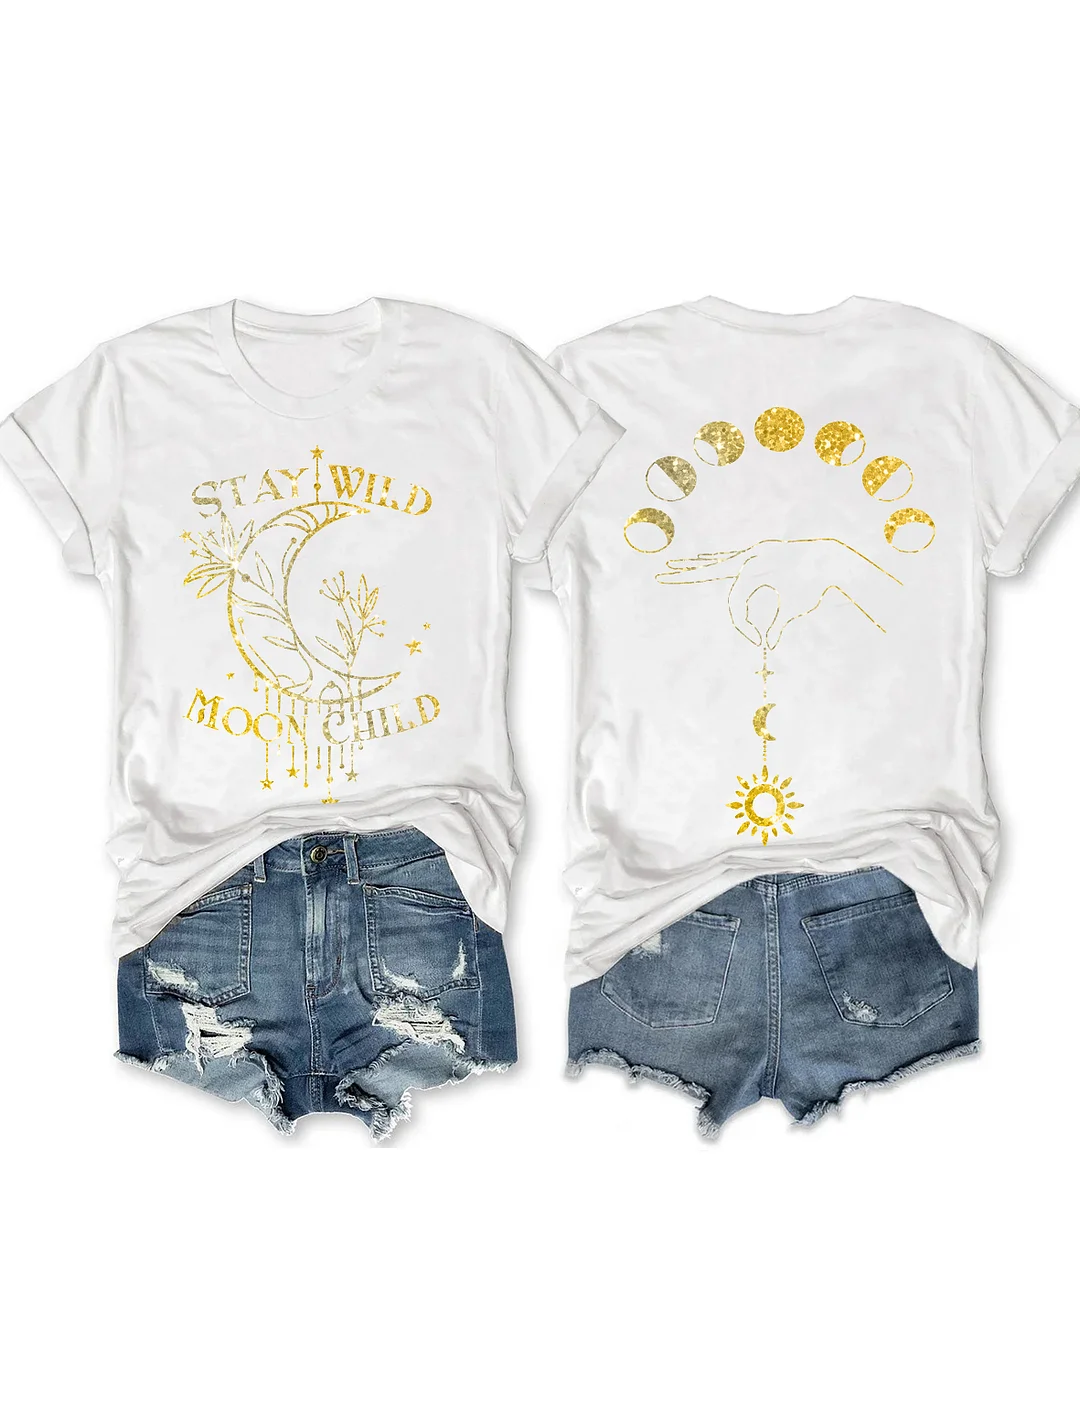 Sparkle Stay Wild Moon Child T-shirt